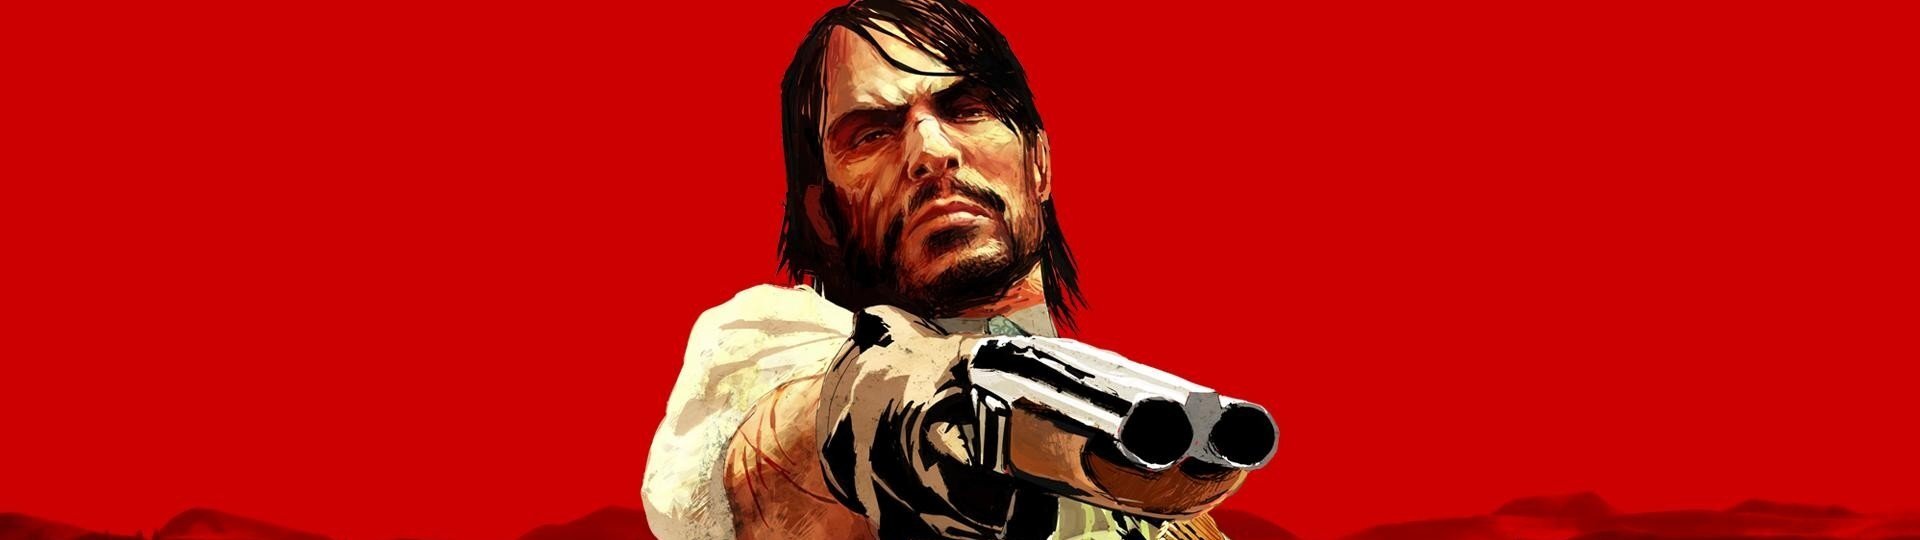 Že by Rockstar pracoval na remasteru Red Dead Redemption? | Spekulace